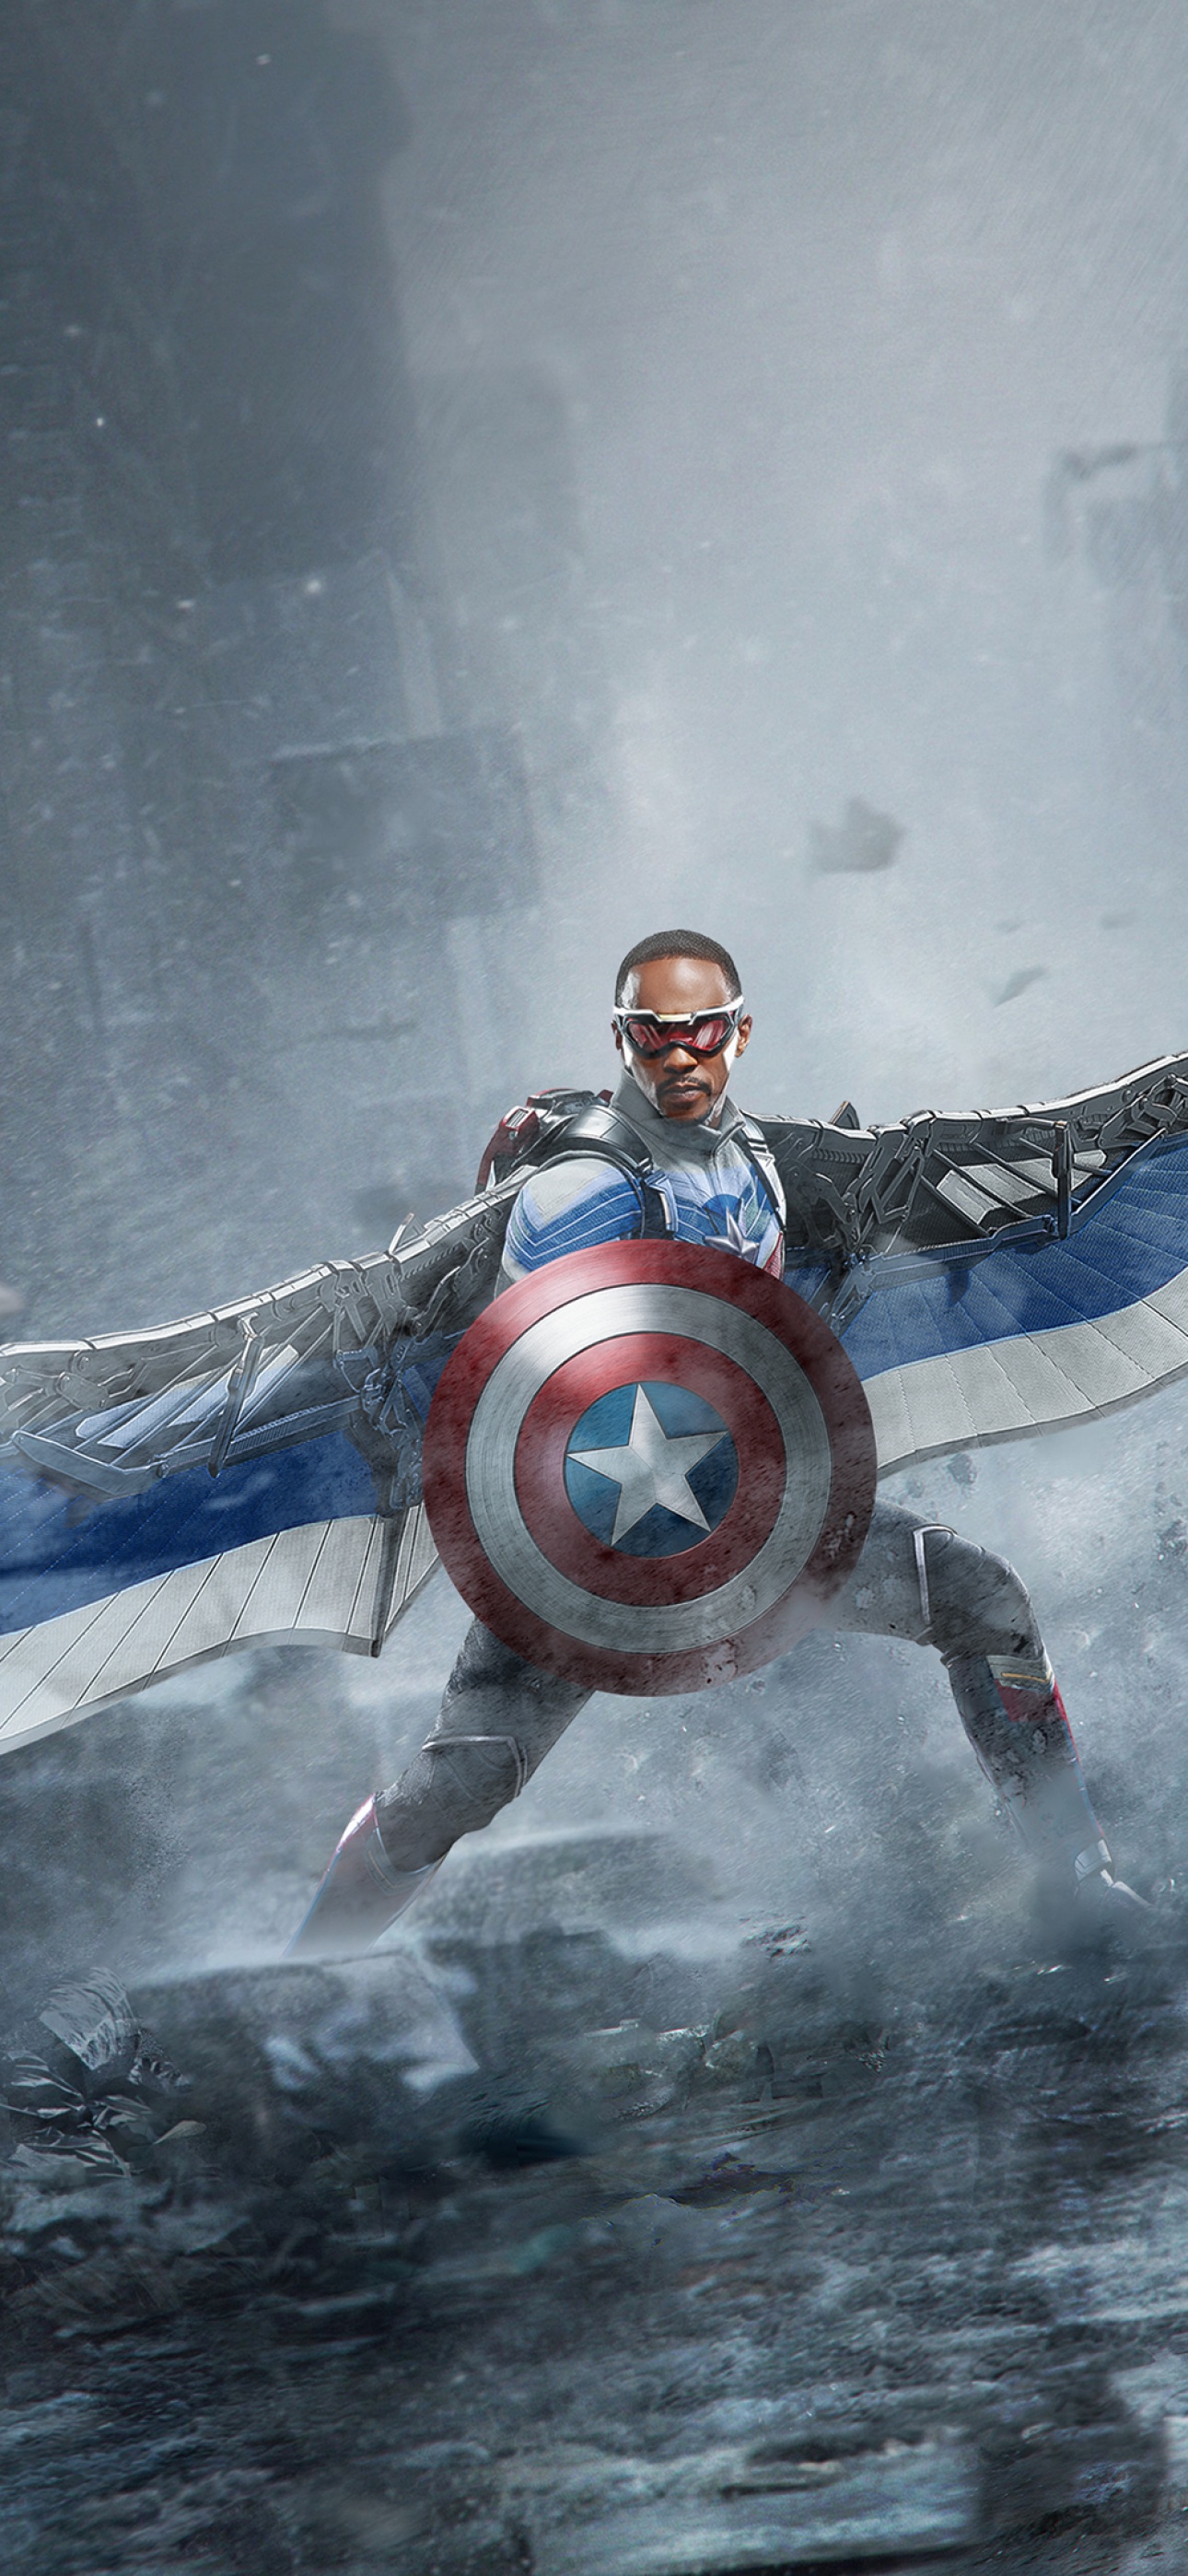 Super Herois Captain America Civil War Hd Wallpaper 2560x1440 :  Wallpapers13.com